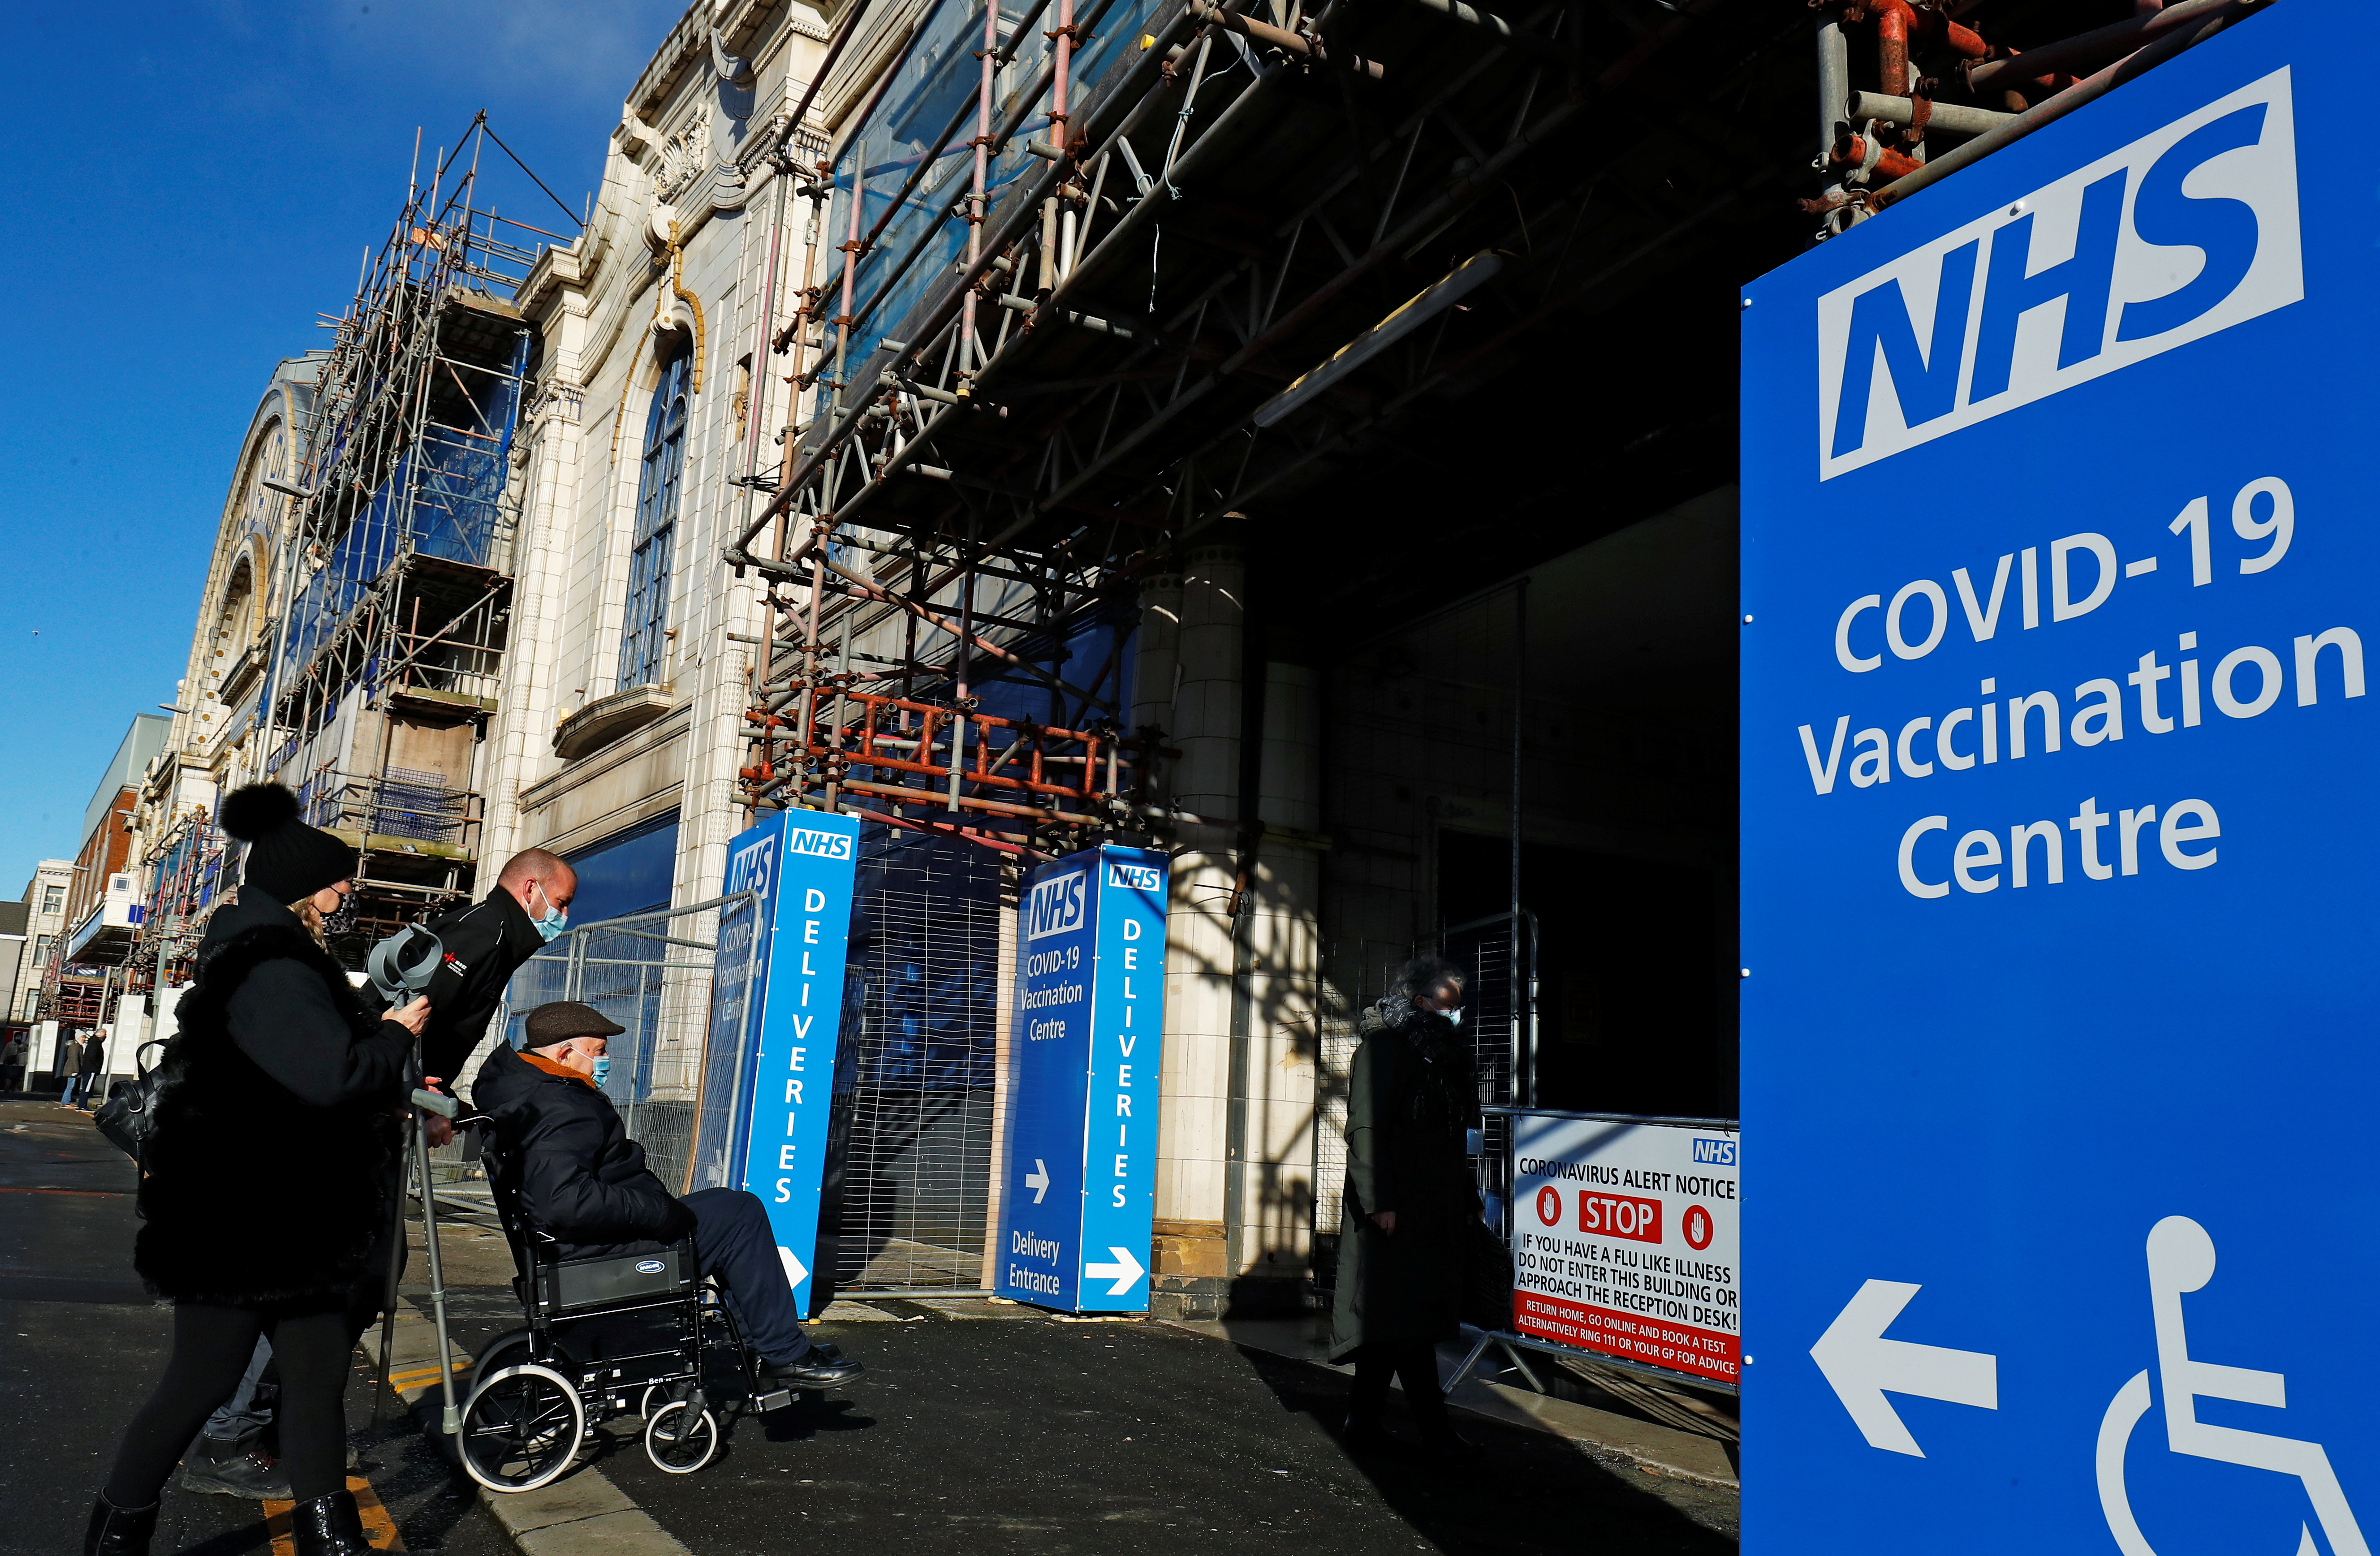 COVID-19 vaccination in Blackpool